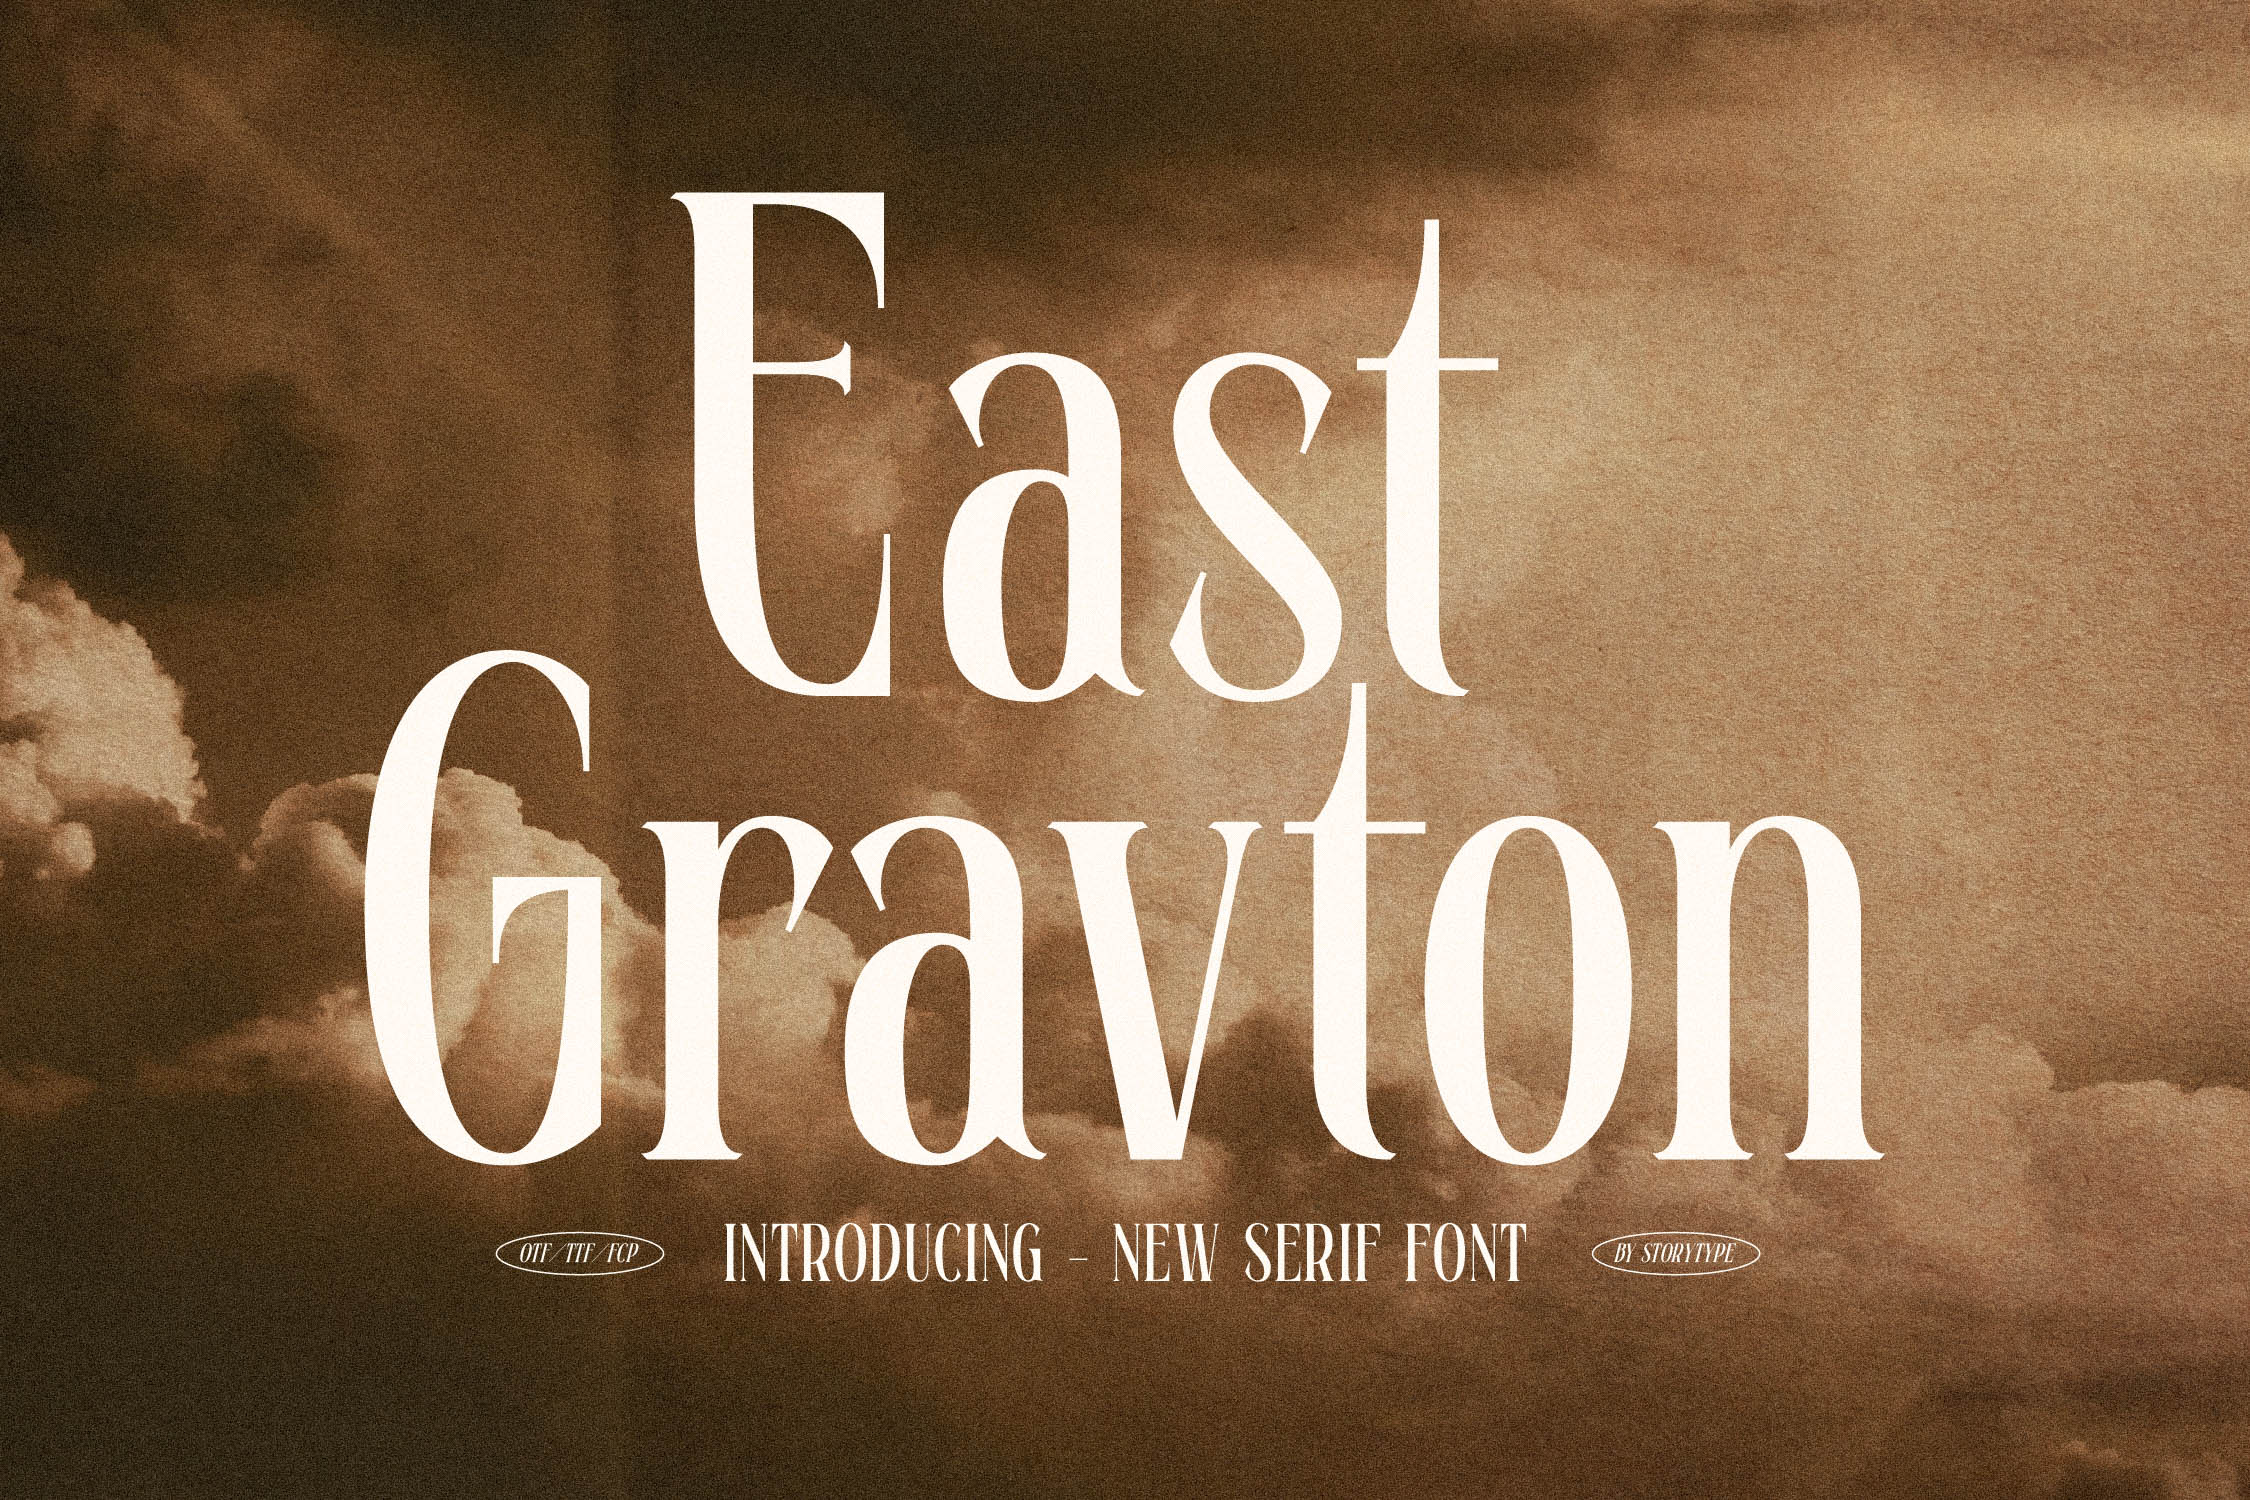 East Gravton Free Font